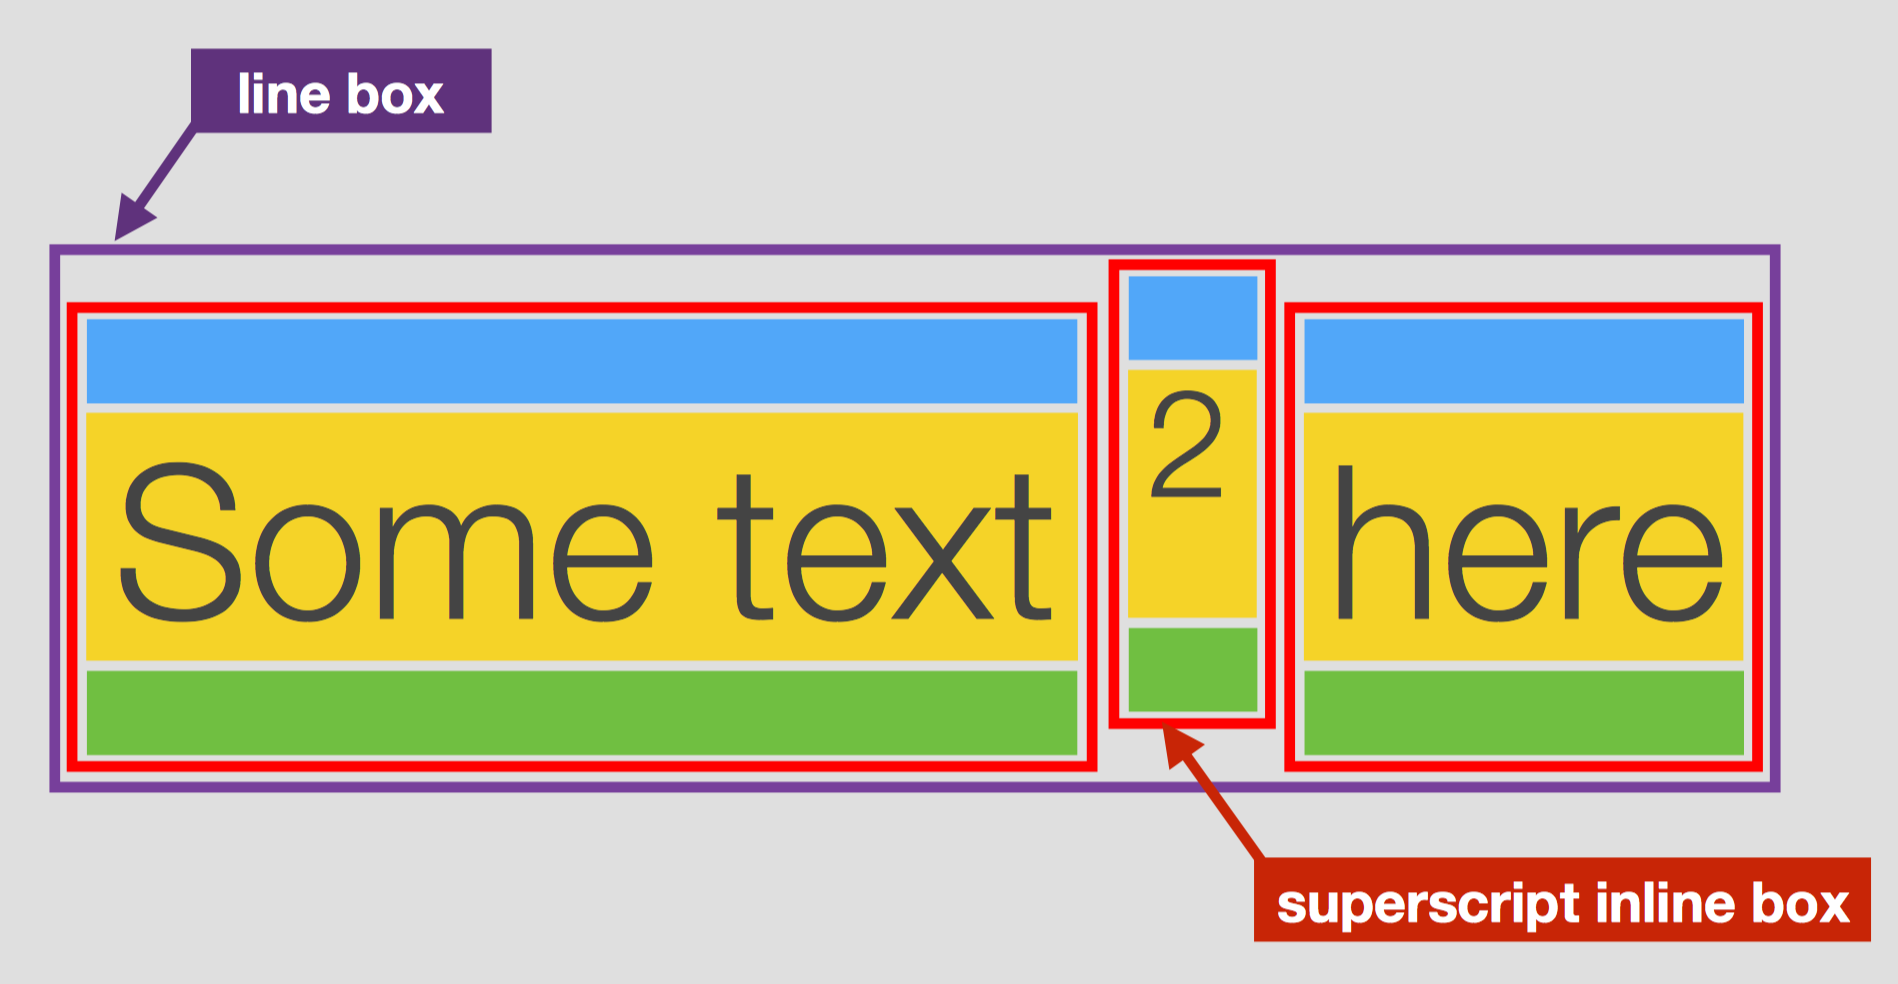 line-box-with-superscript-inline-box